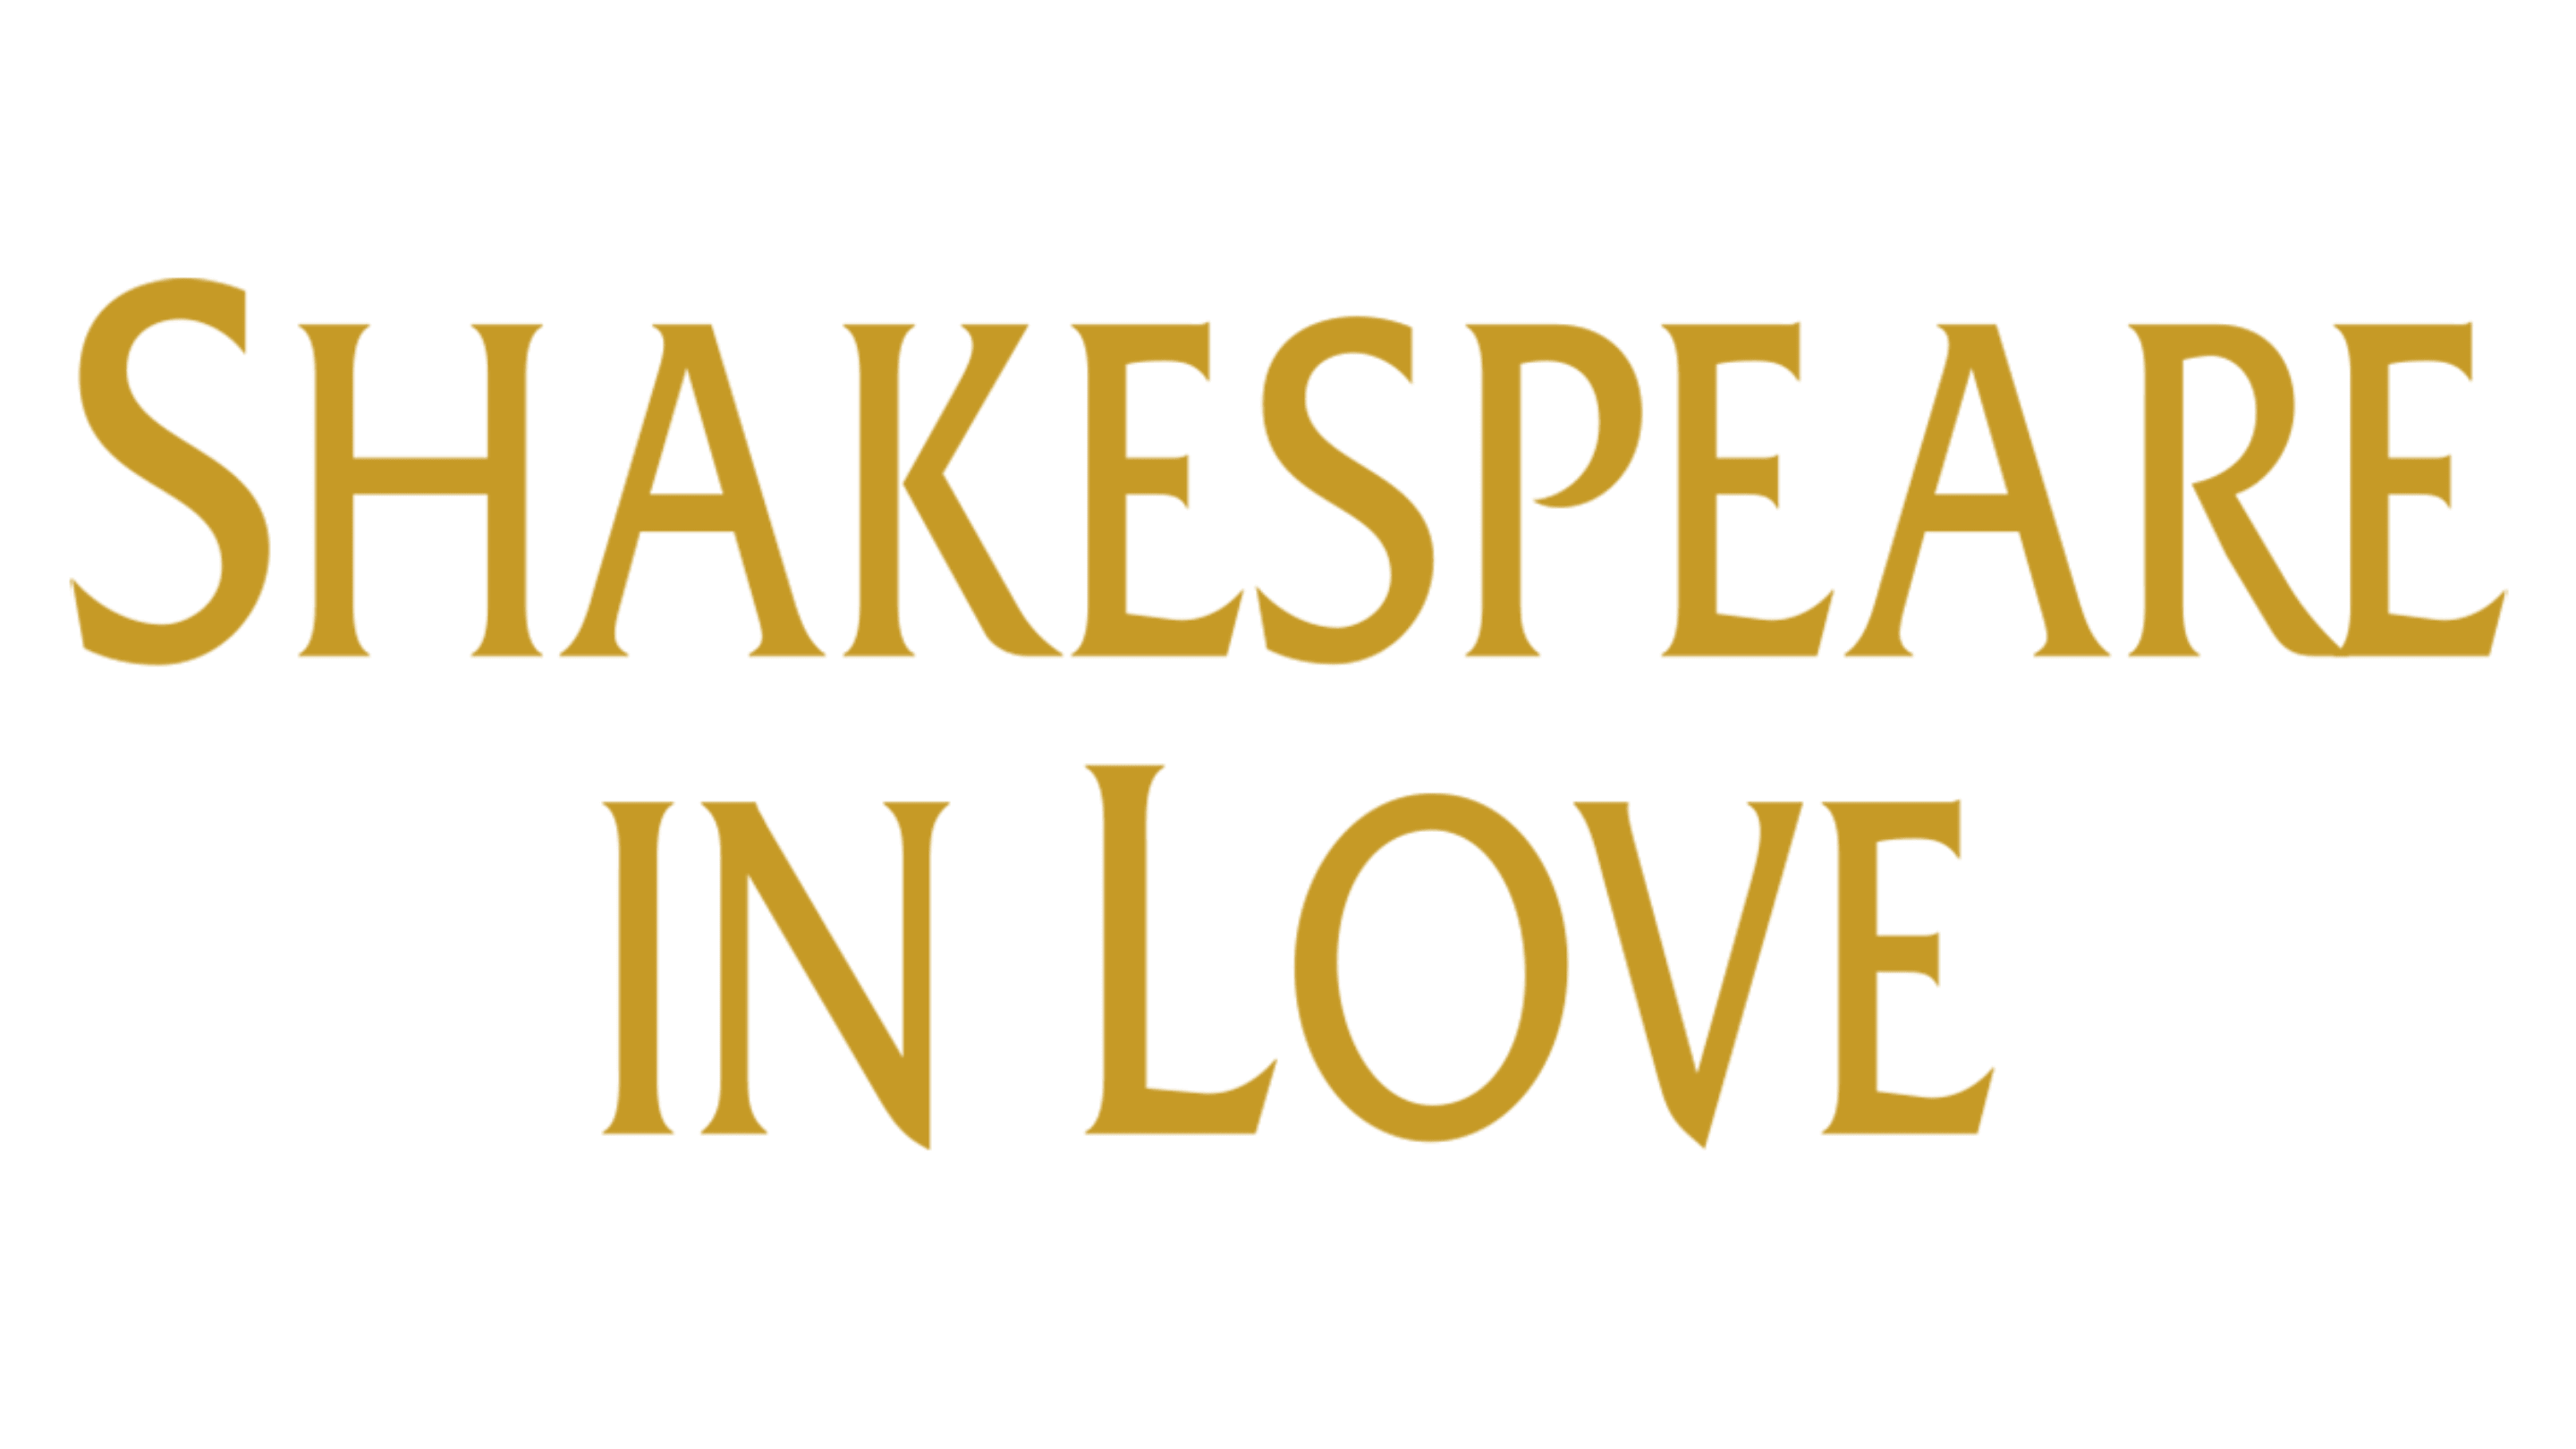 Shakespeare in Love